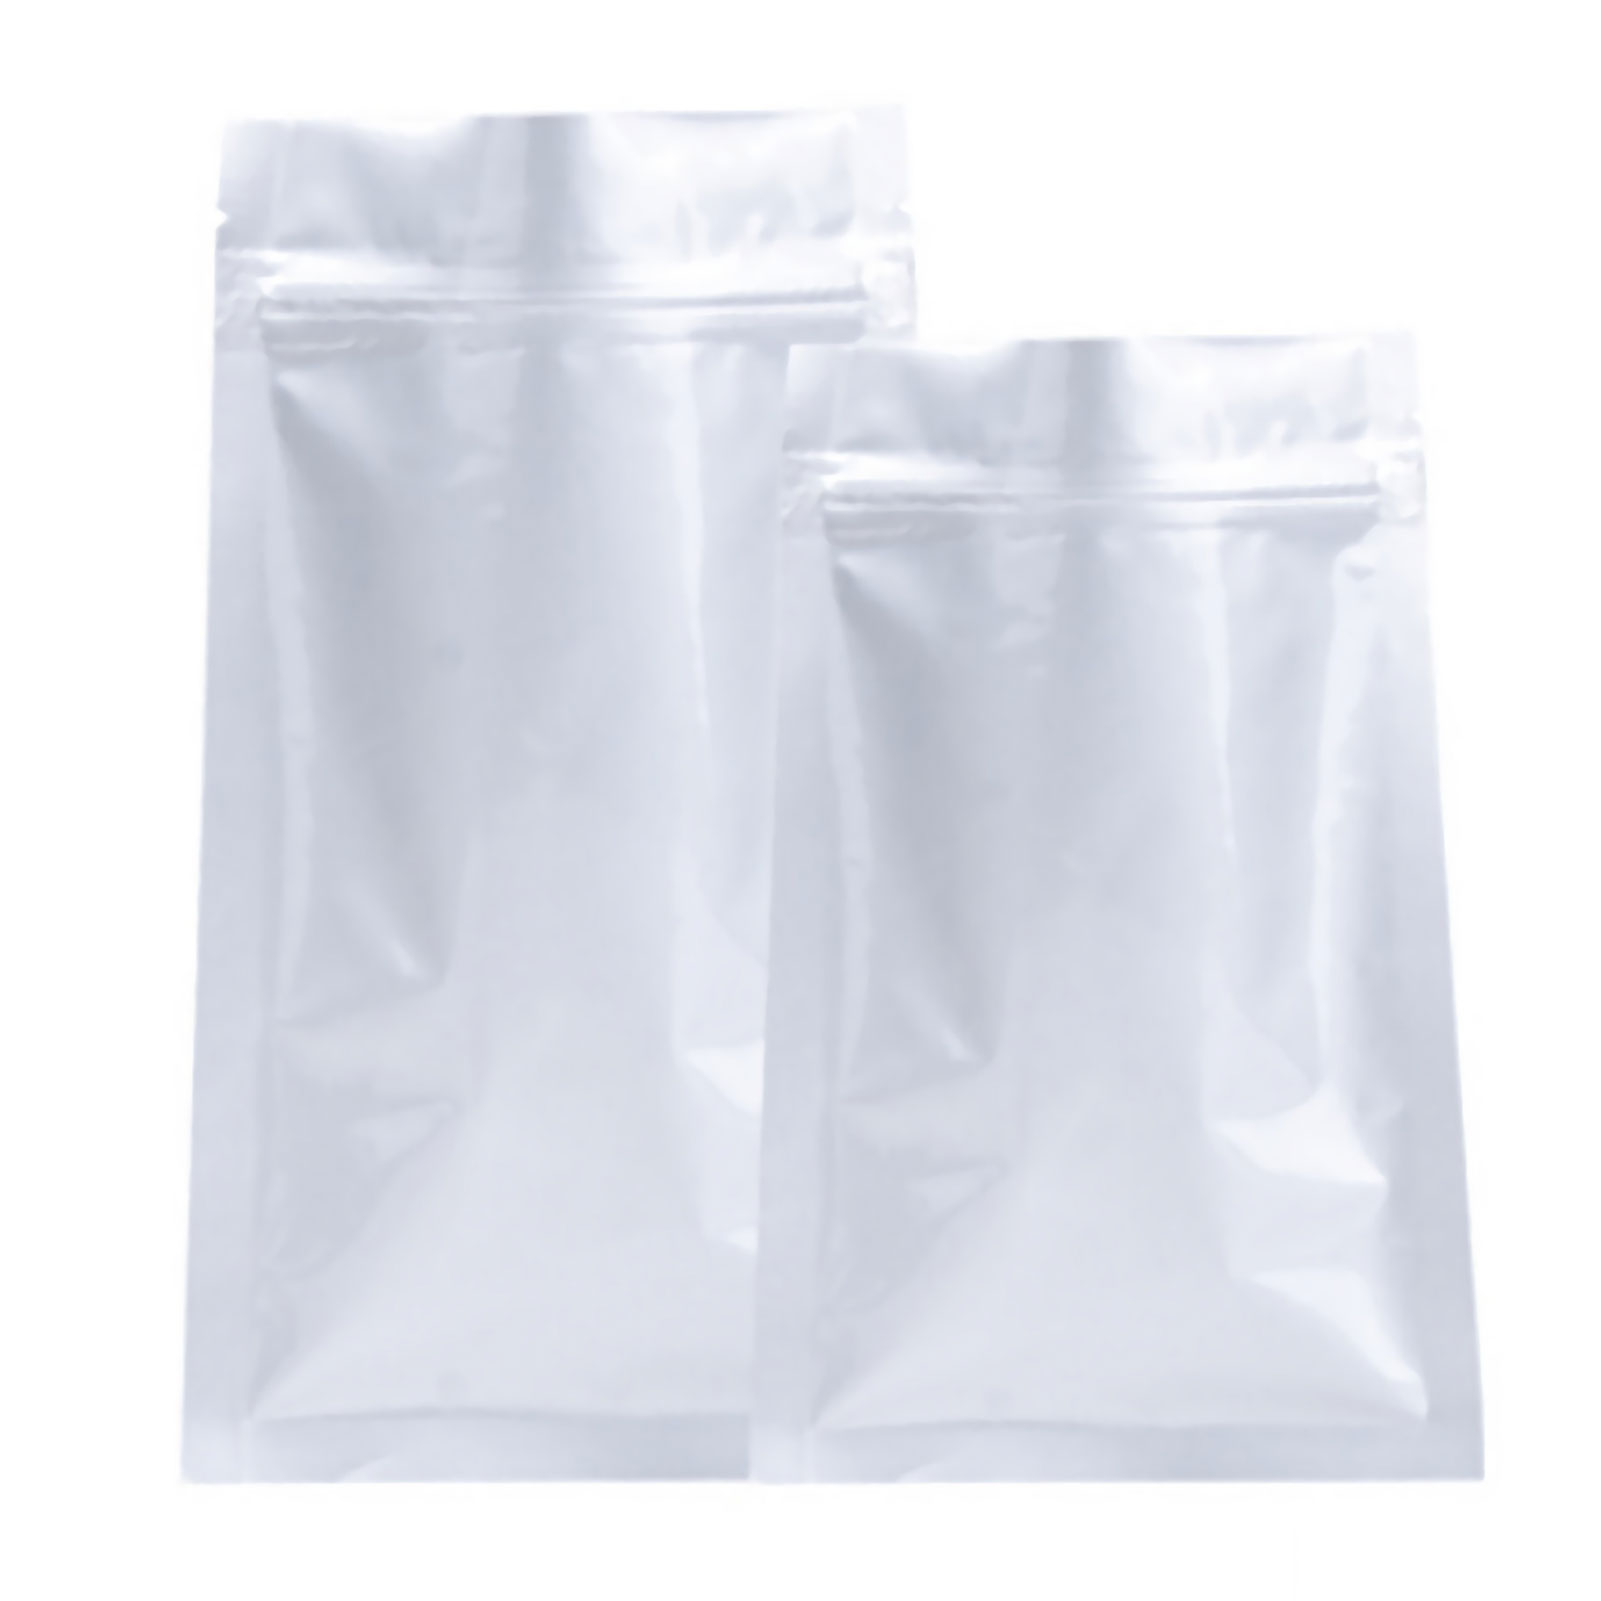 ADAMAS BETA Aluminum Foil Flat Bottom Self Sealing Bag One Side Thickness 10-12 Silk Laboratory Pet Split/Package Bags(Pack of 50)